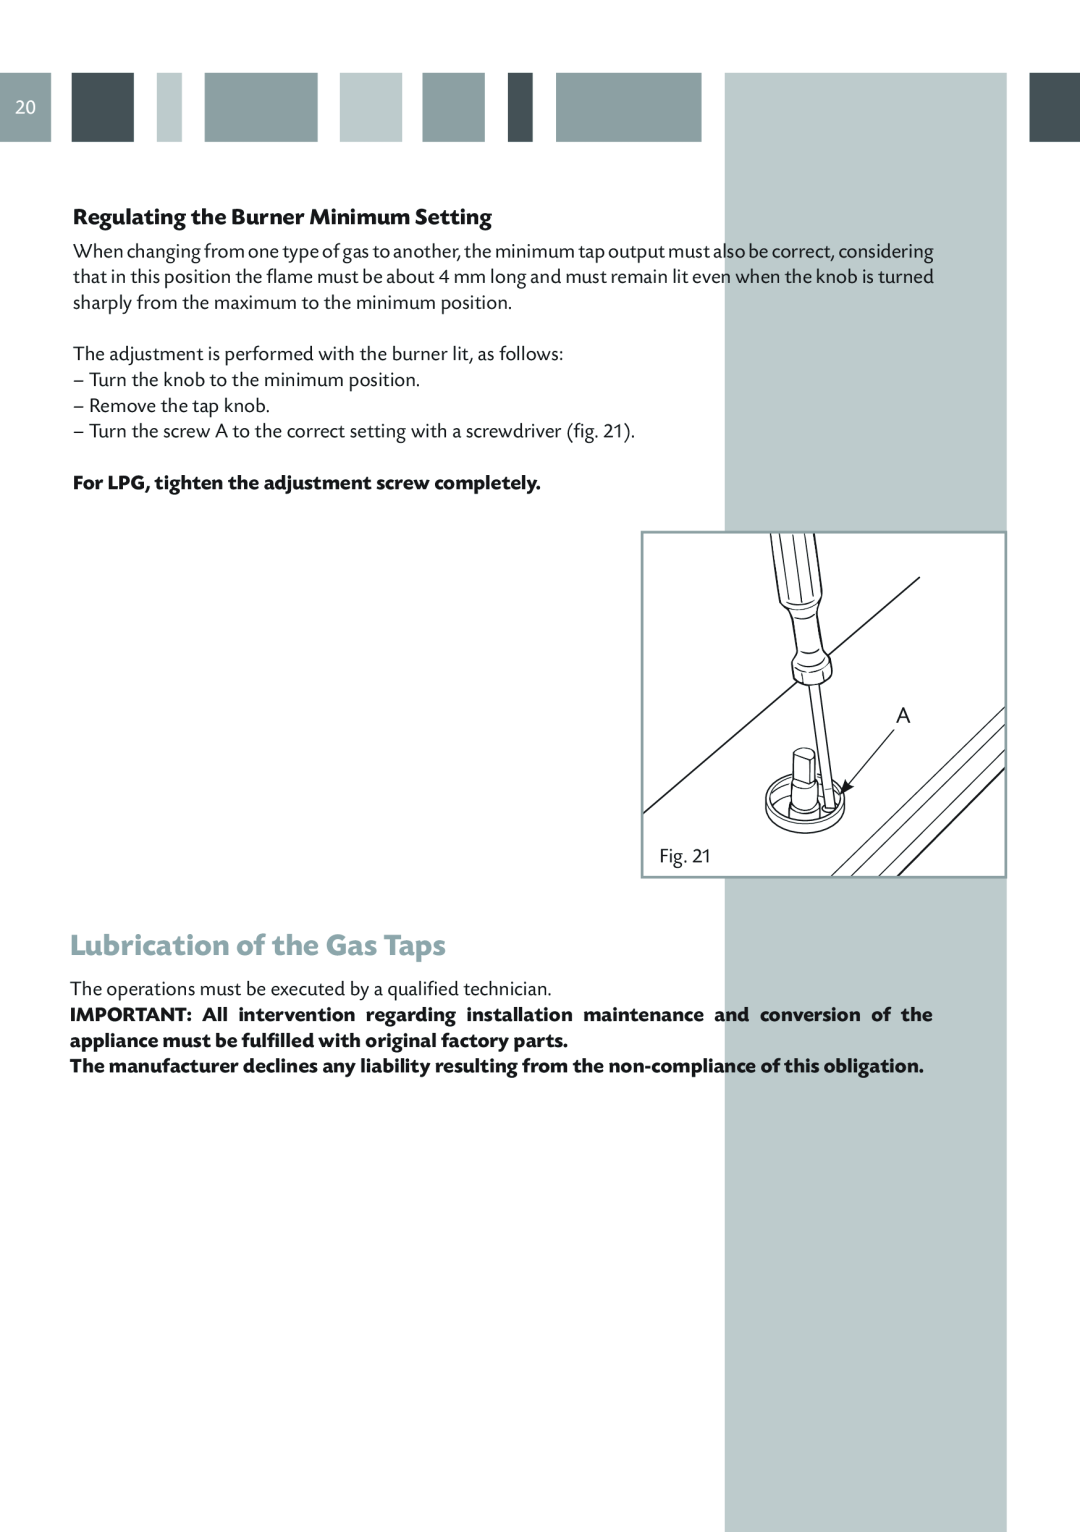 CDA HCG 731, HCG 741 manual Lubrication of the Gas Taps, Regulating the Burner Minimum Setting 